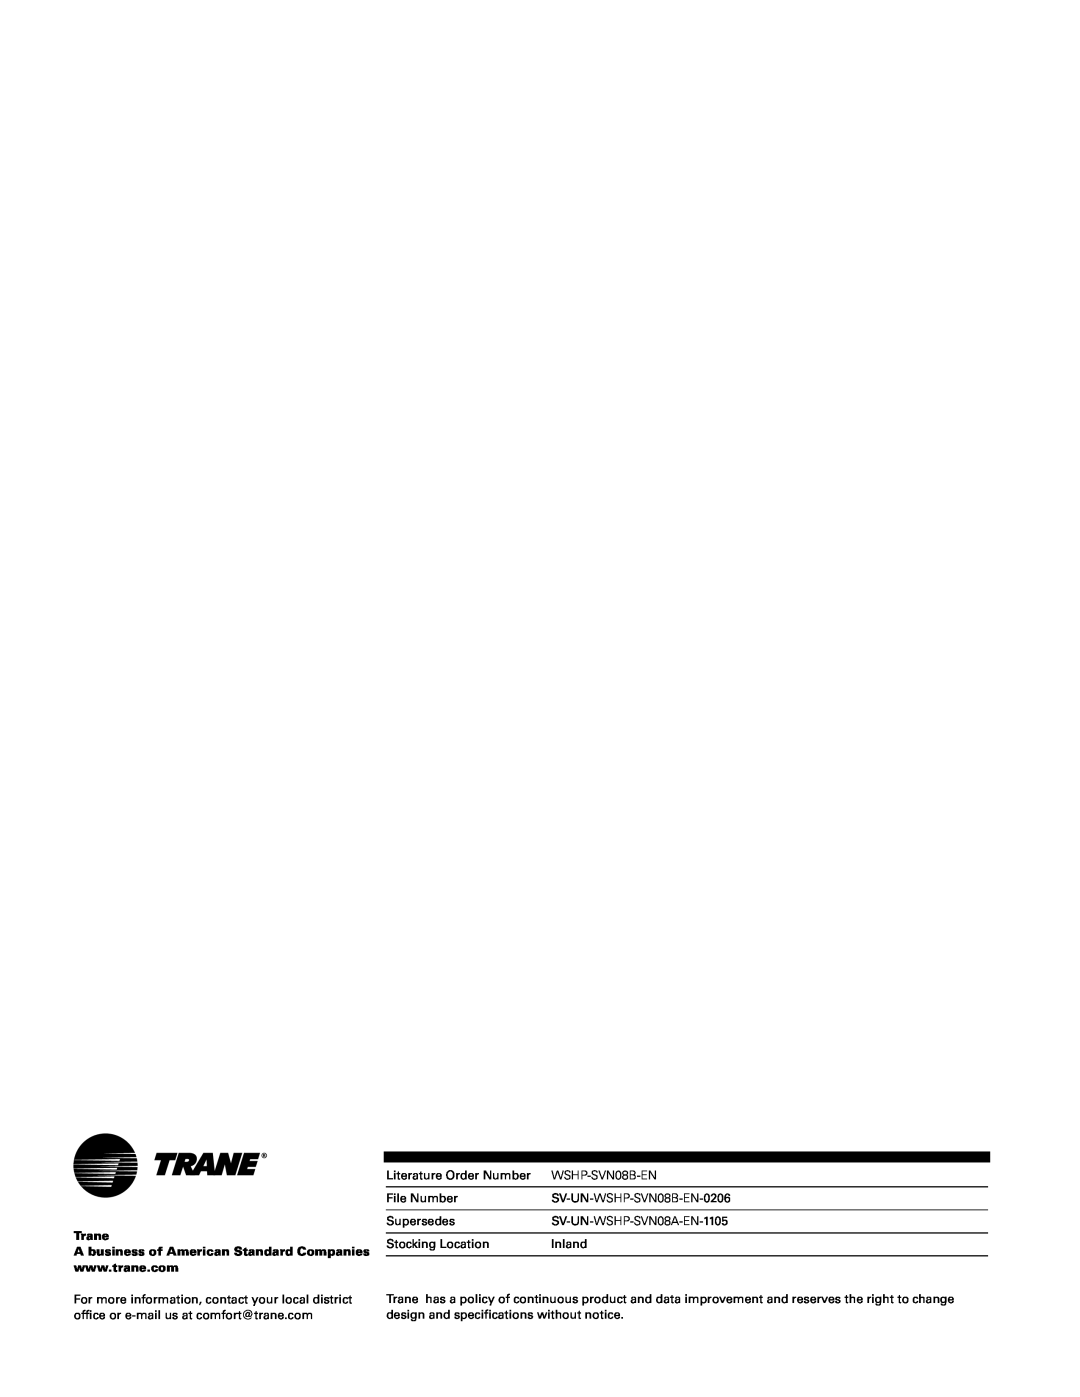 Trane GETB manual Trane, A business of American Standard Companies 